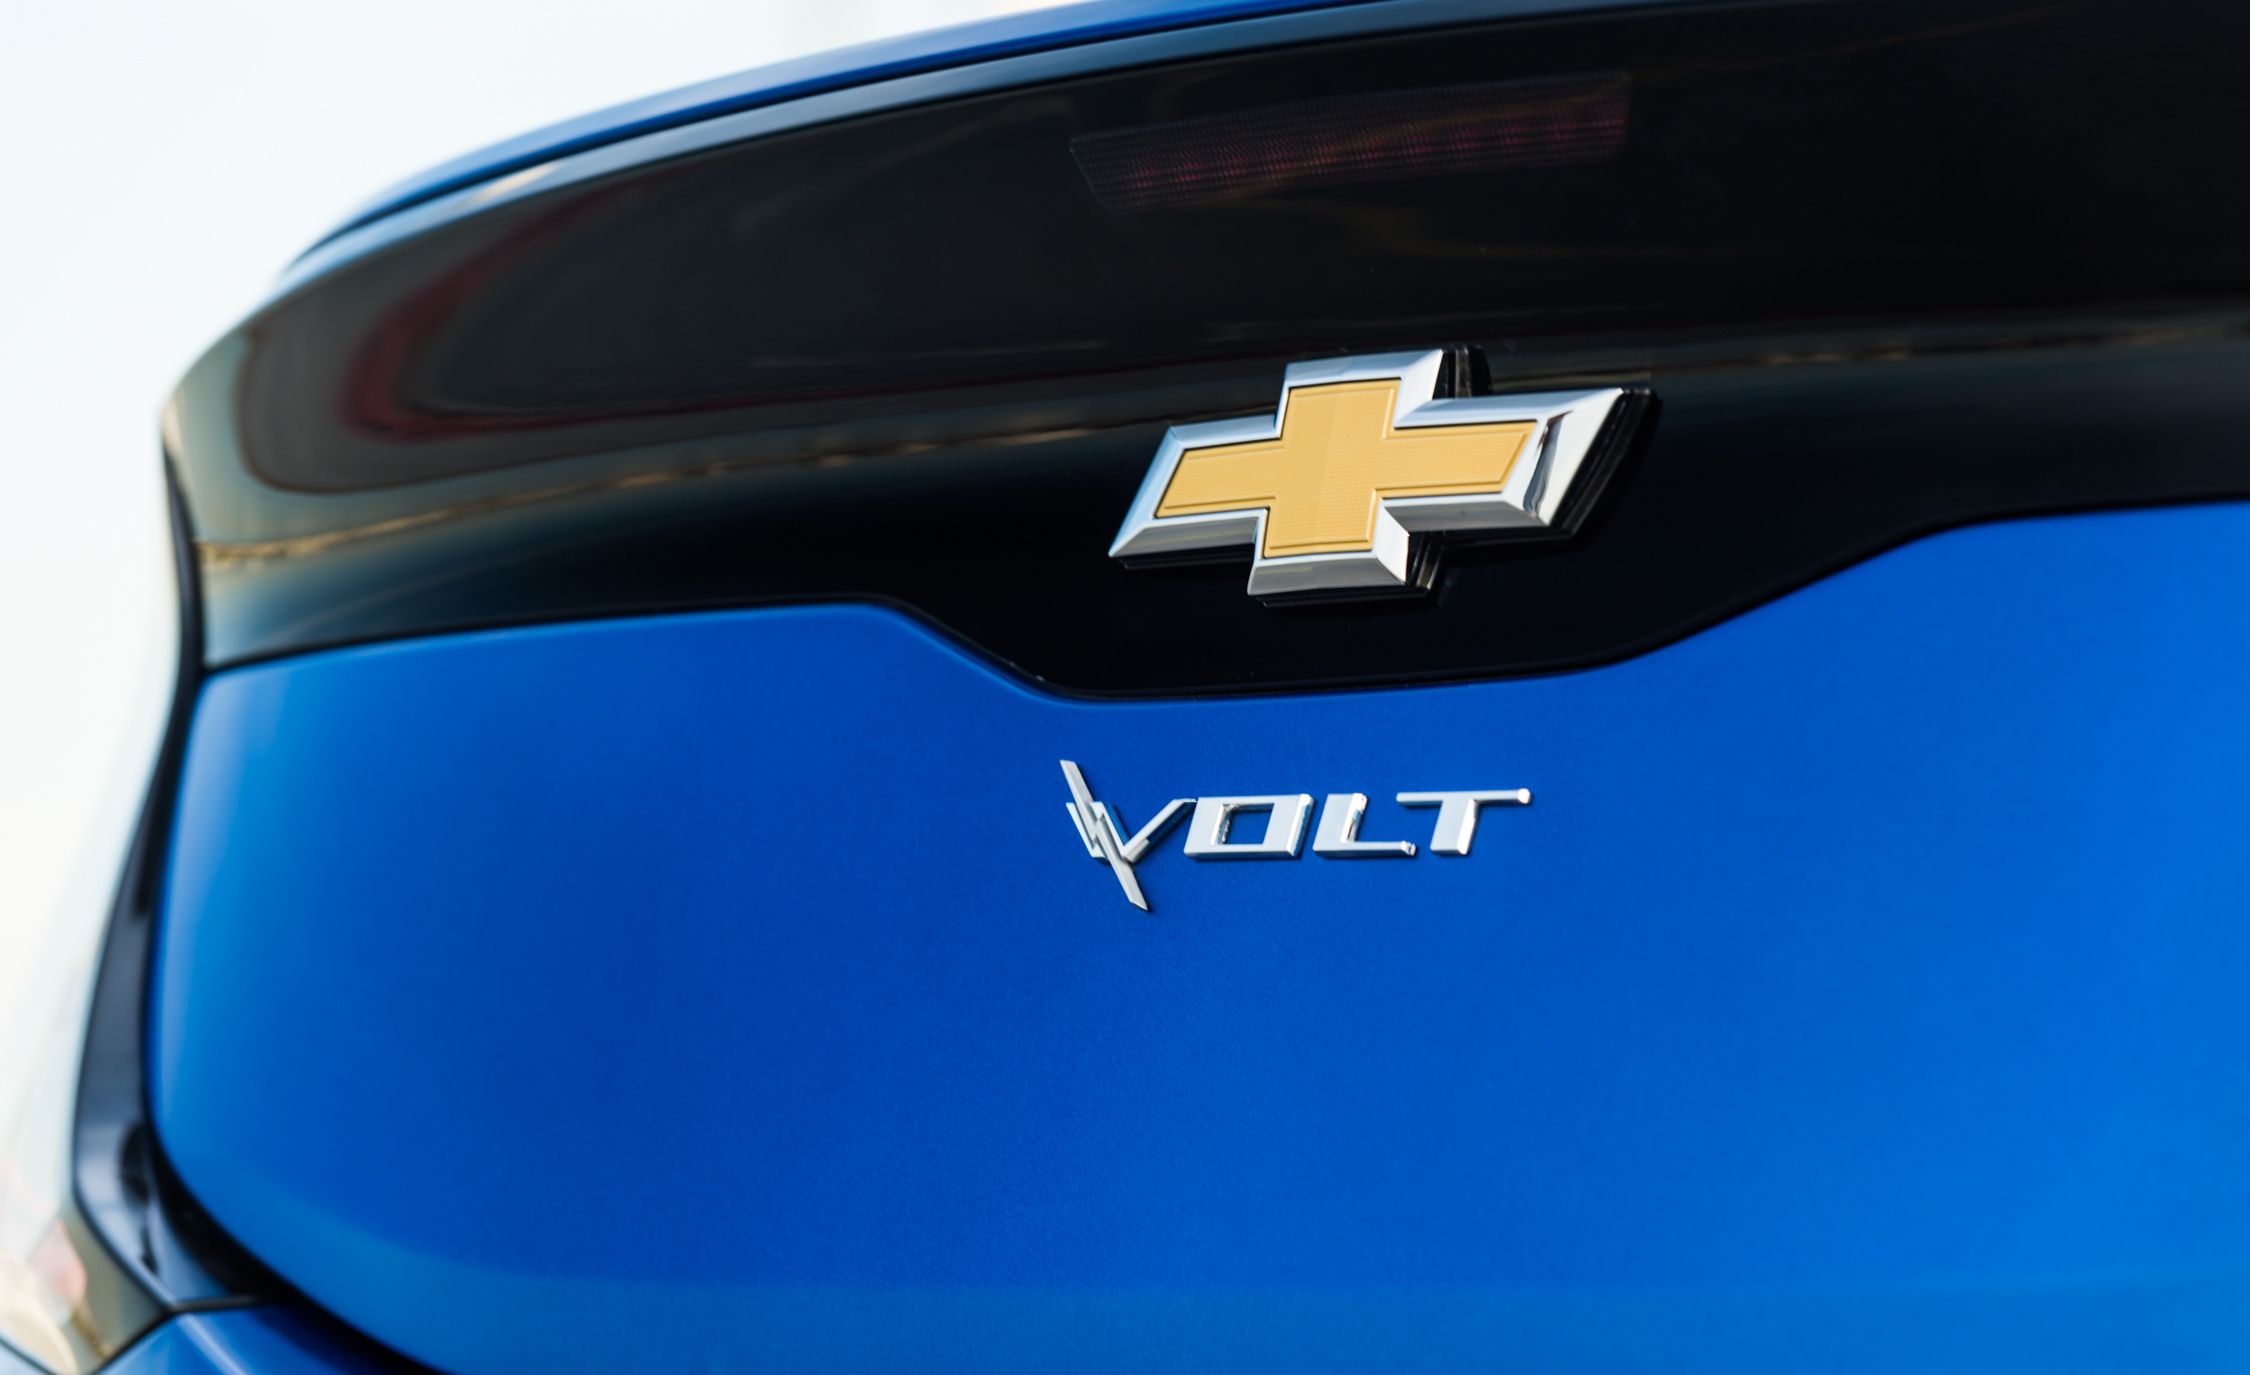 2017 Chevrolet Volt Exterior View Rear Emblem And Badge (View 11 of 16)